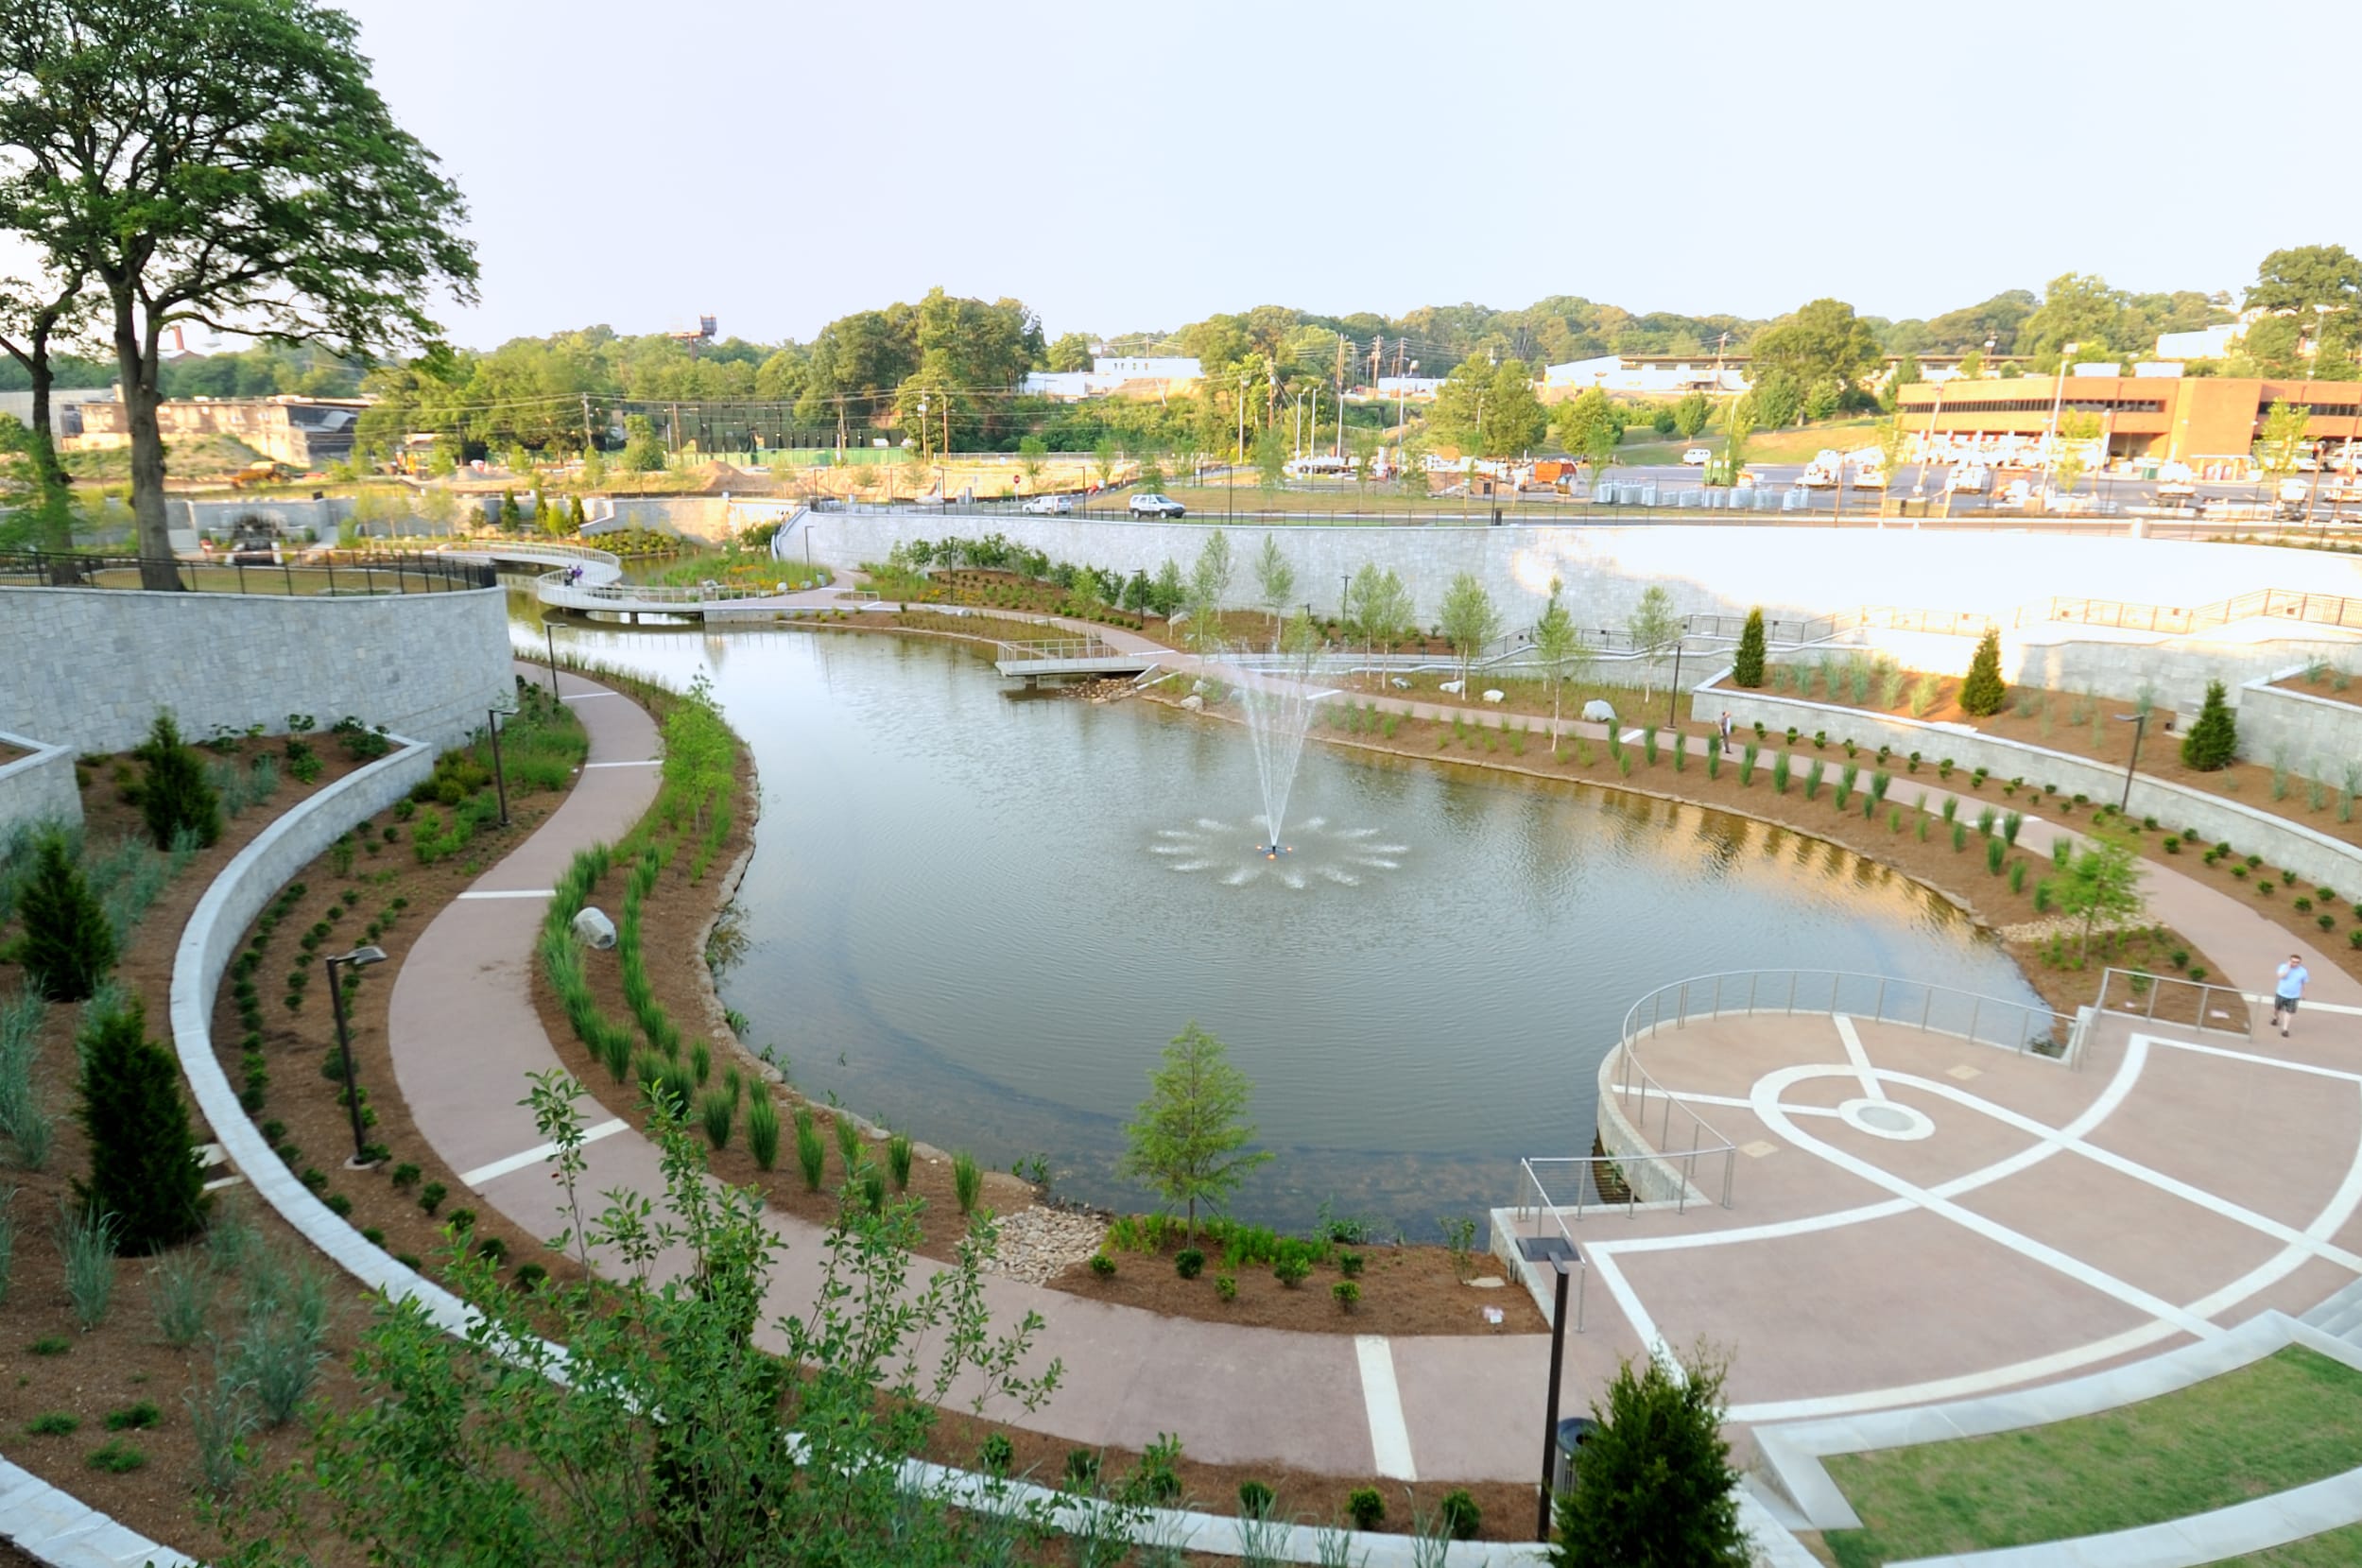 A circular pond in a park.